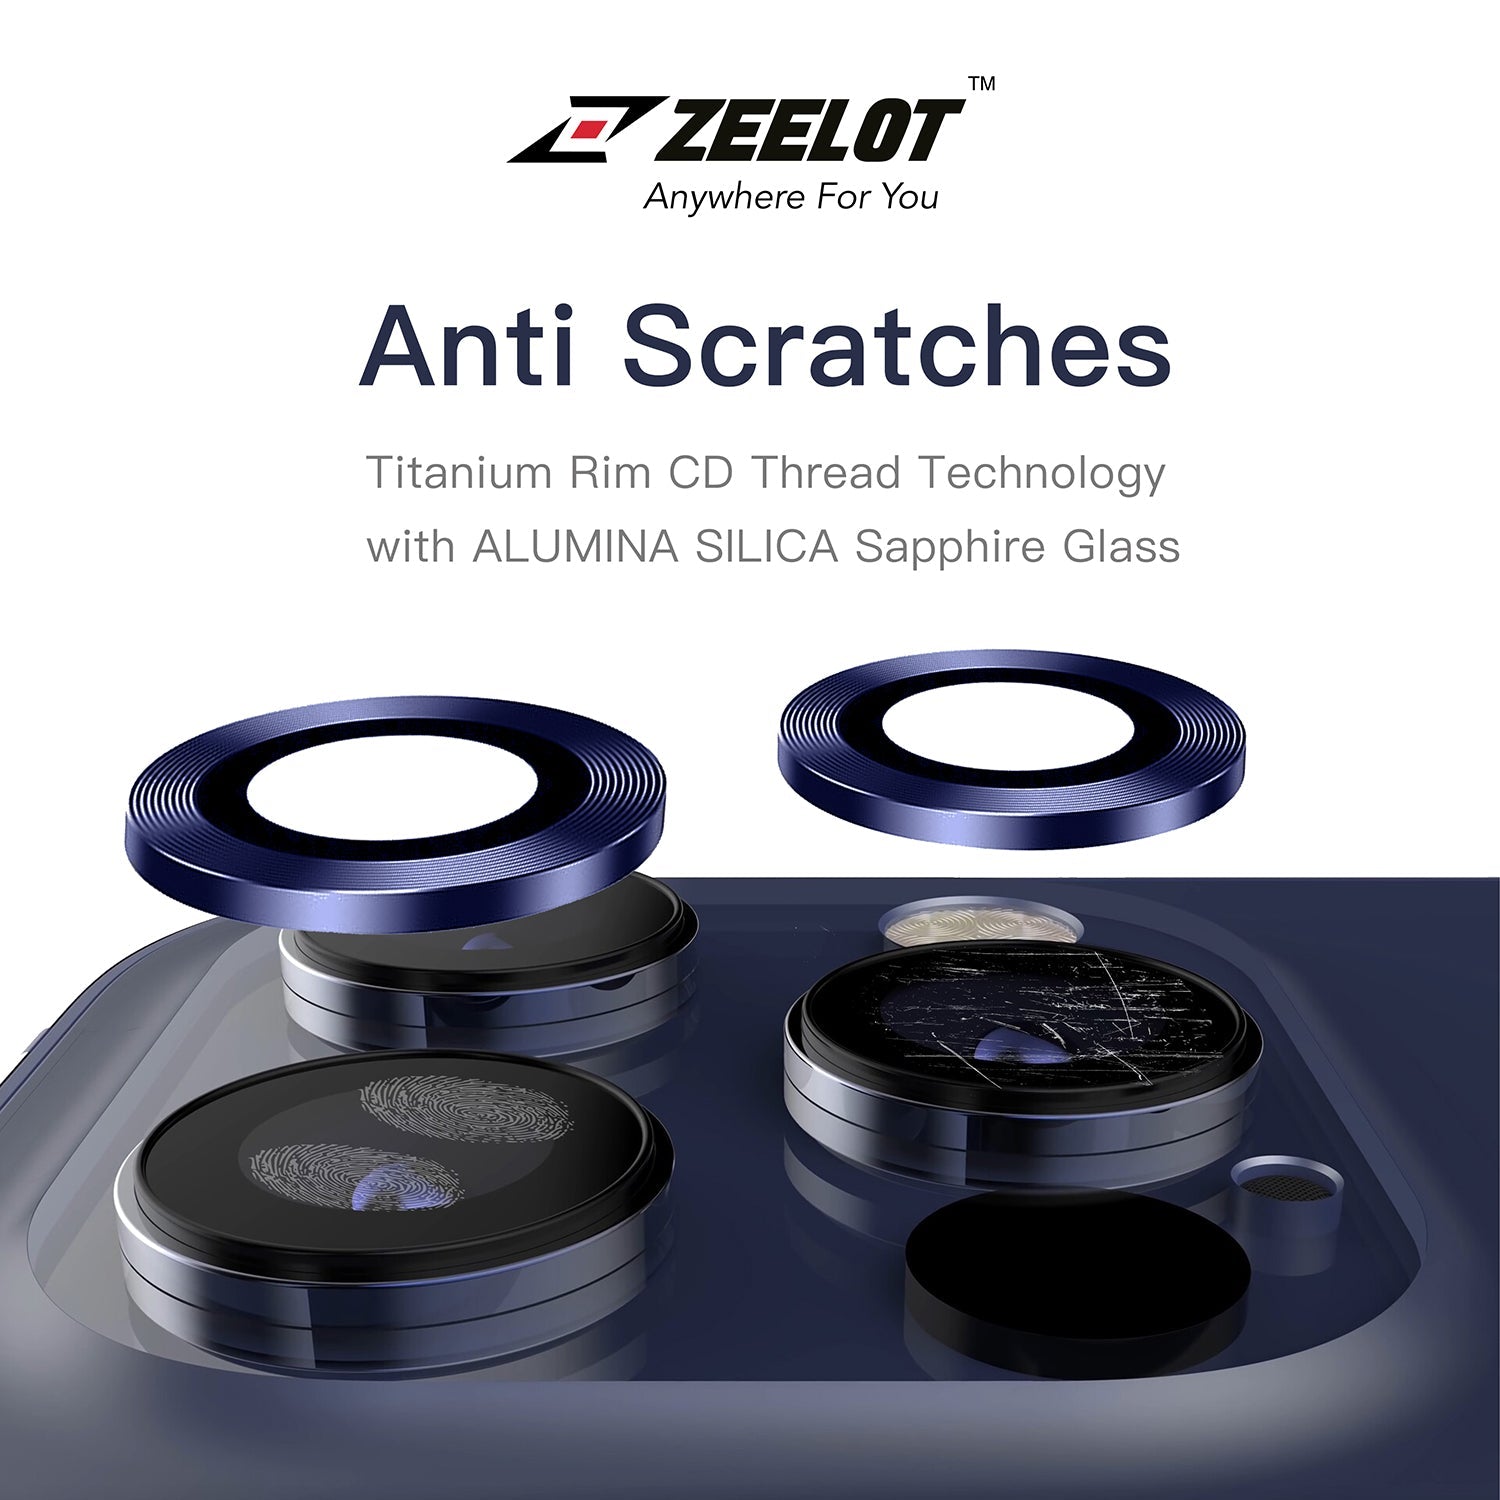 ZEELOT Titanium Steel Diamond Design with Lens Protector for iPhone 11 Pro 5.8"/11 Pro Max 6.5" (Three Cameras), Silver Default ZEELOT 